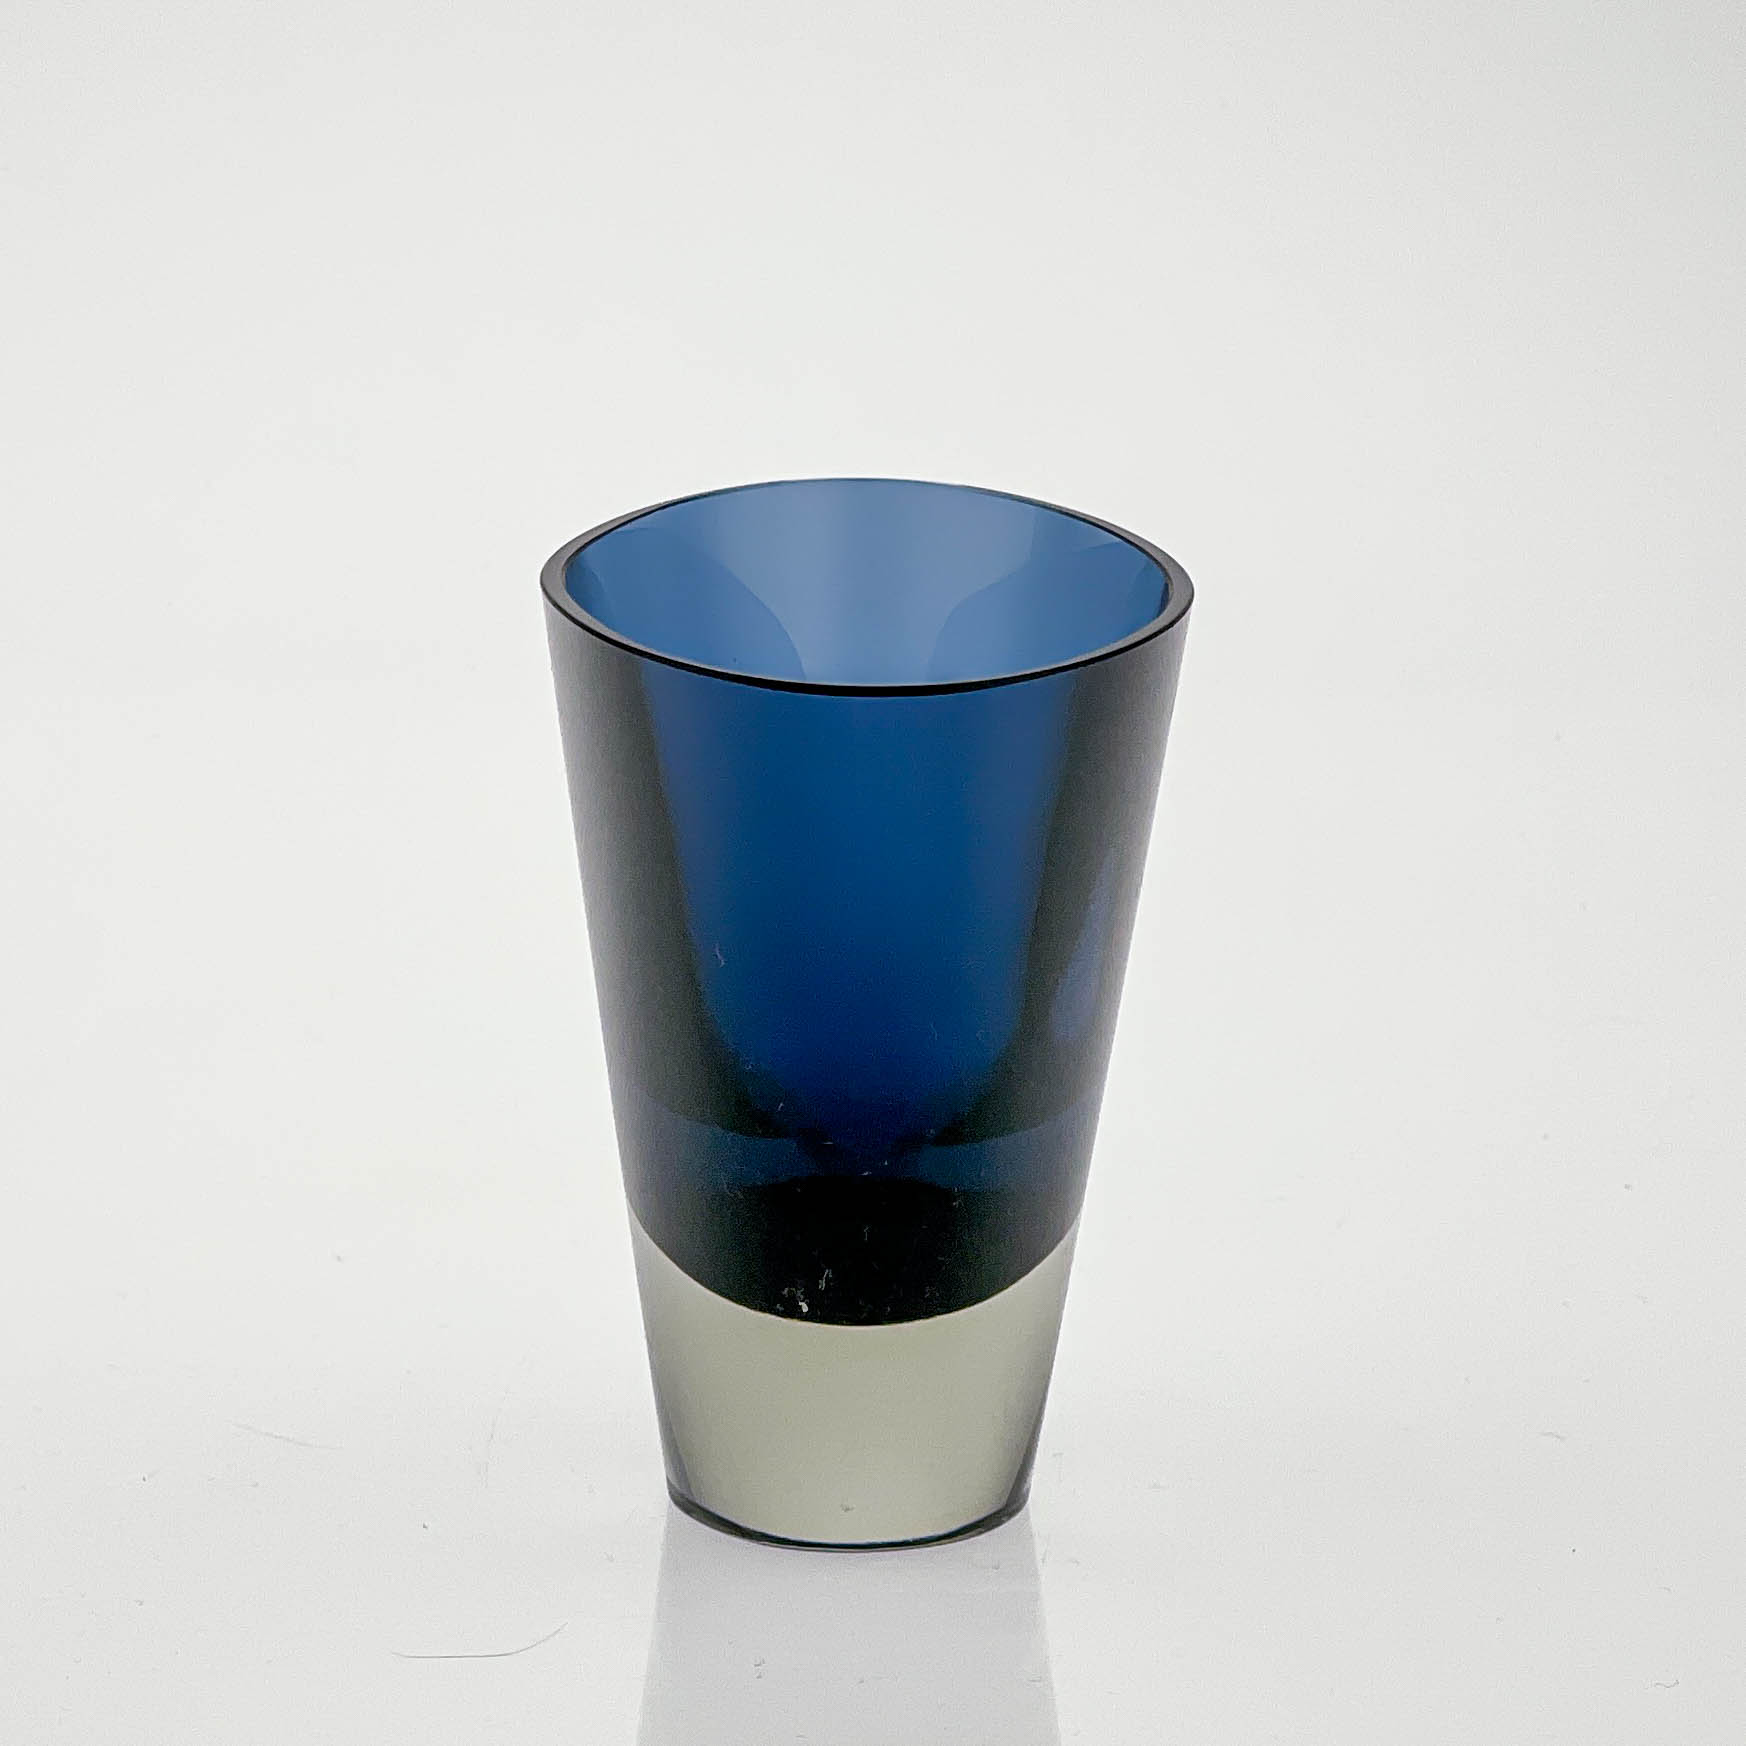 Kaj Franck - Clear and blue glass art-object, model KF234 - Nuutajärvi-Notsjö Finland 1962